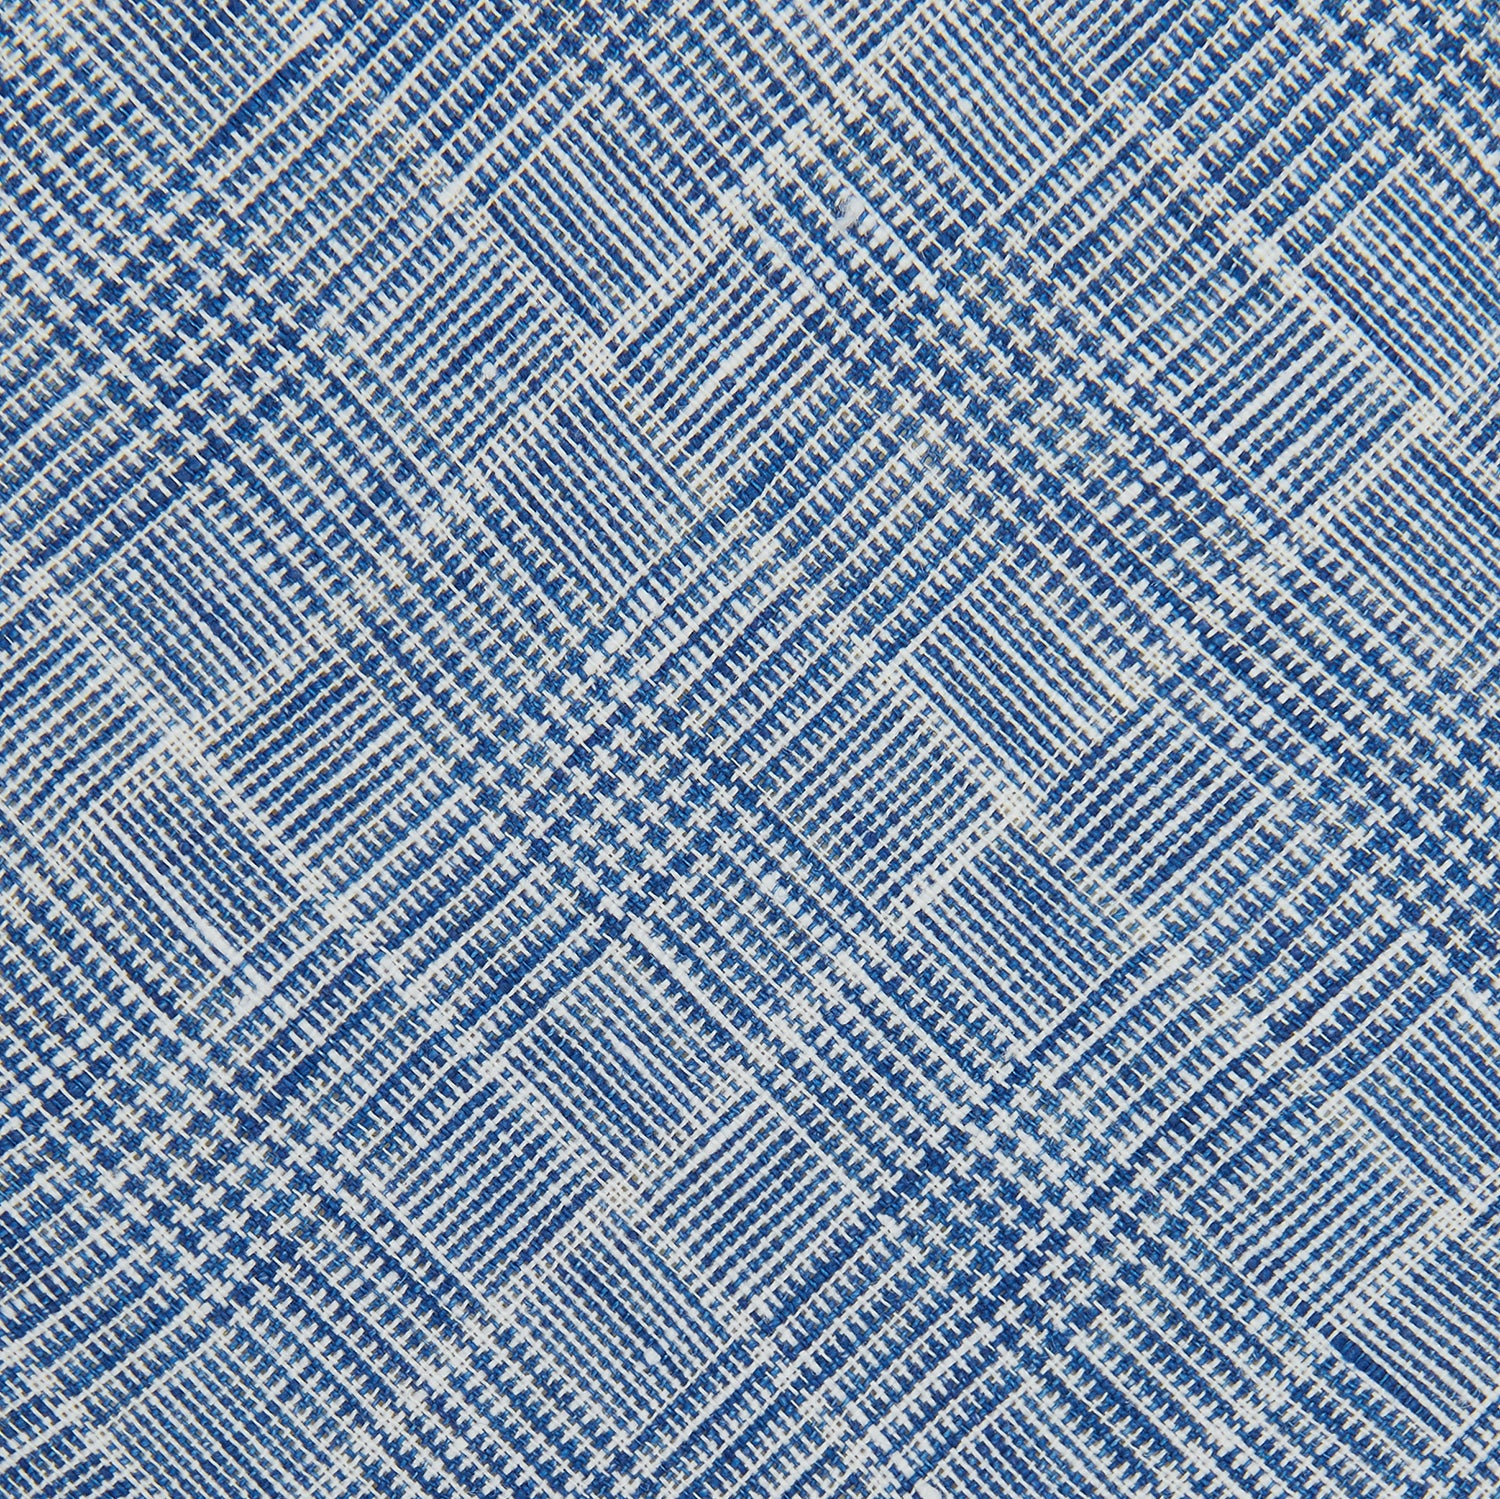 Tonal Blue Glen Check Linen Tie